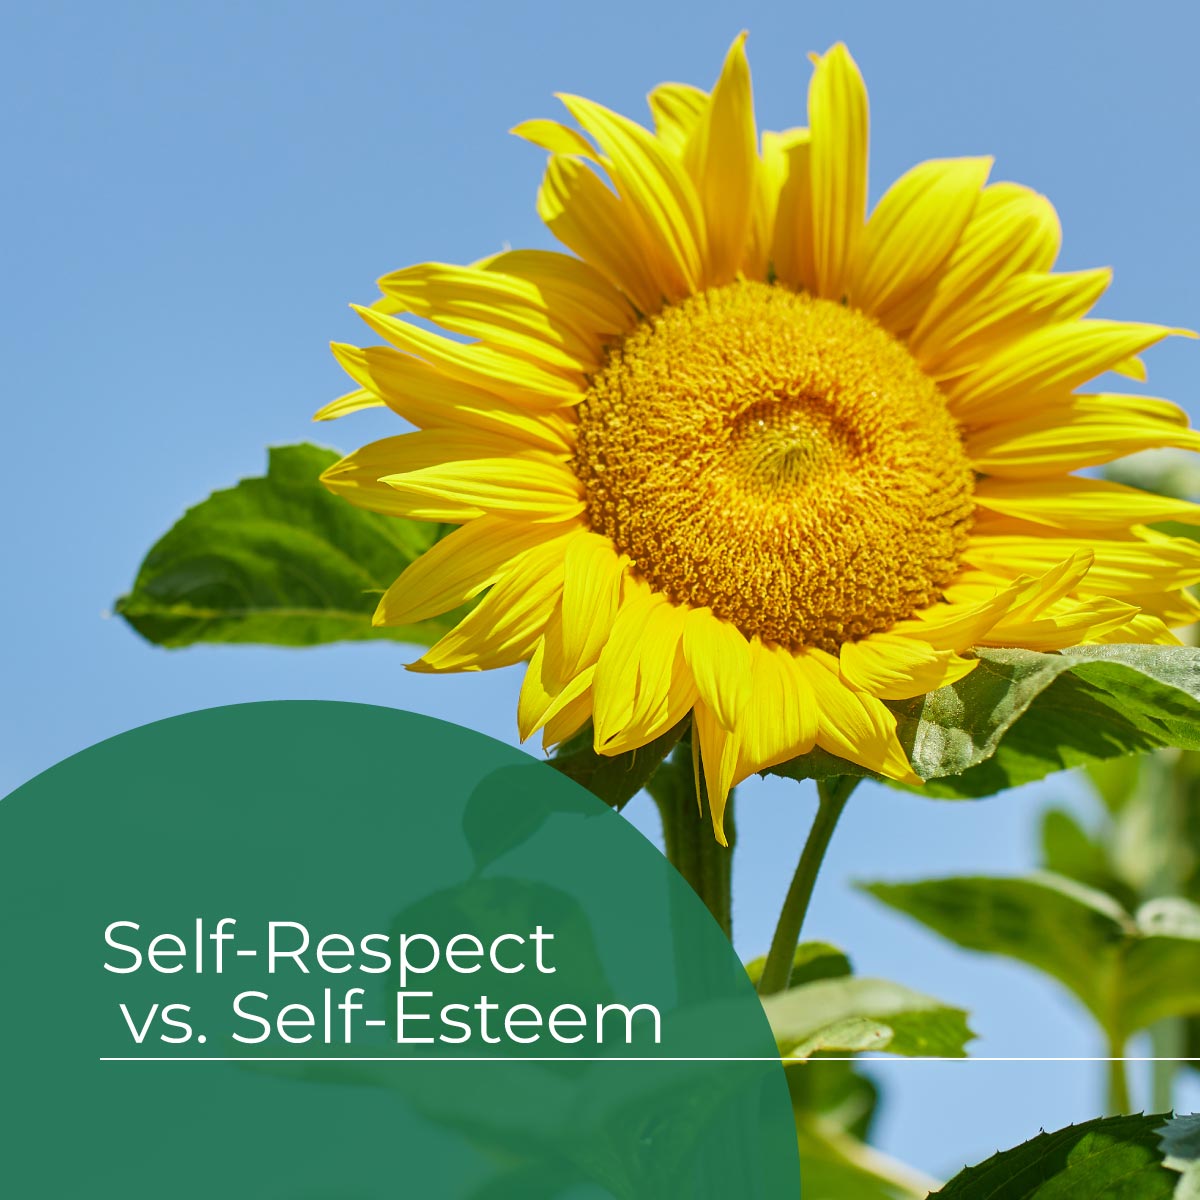 What is self respect vs self esteem